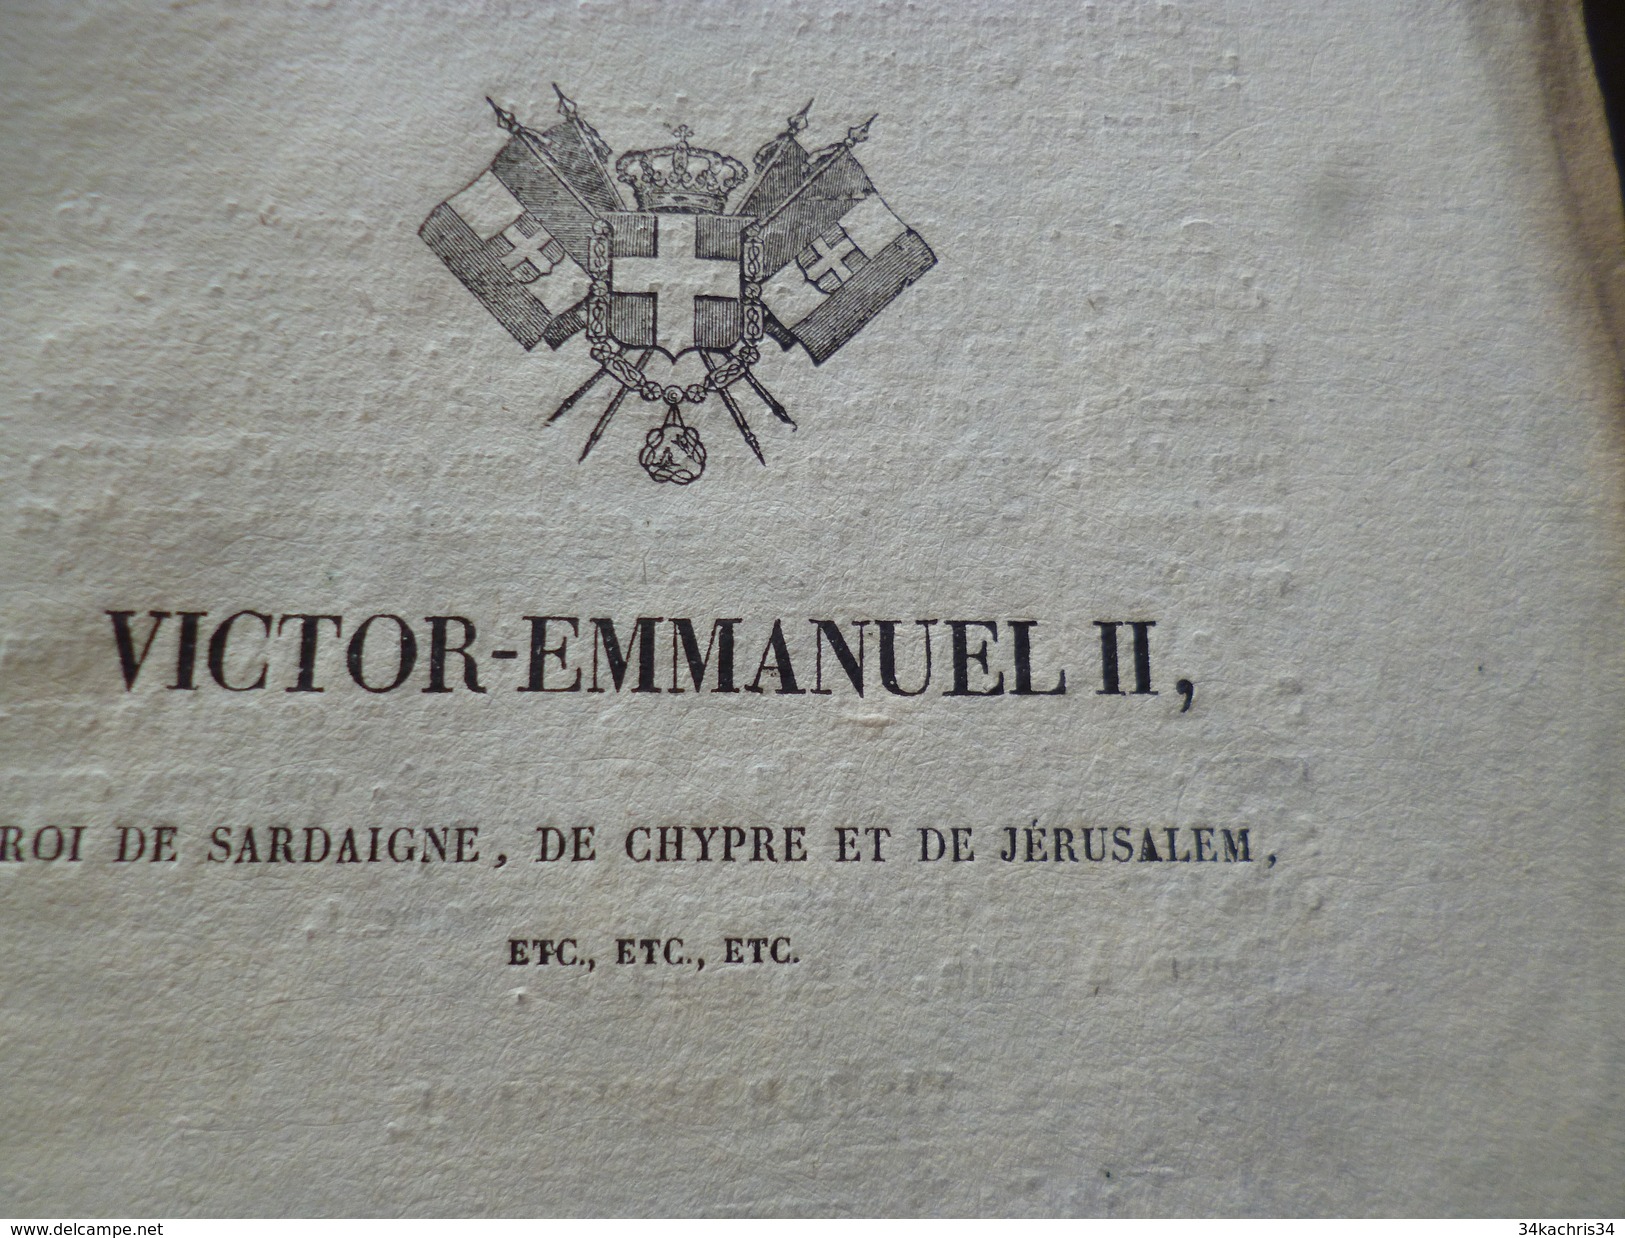 Savoie Haute Savoie Victore Emmanuel II Roi Sardaigne, Chypre, Jérusalem...maladie Du Roi Pourvoir 21/05/1849 - Gesetze & Erlasse